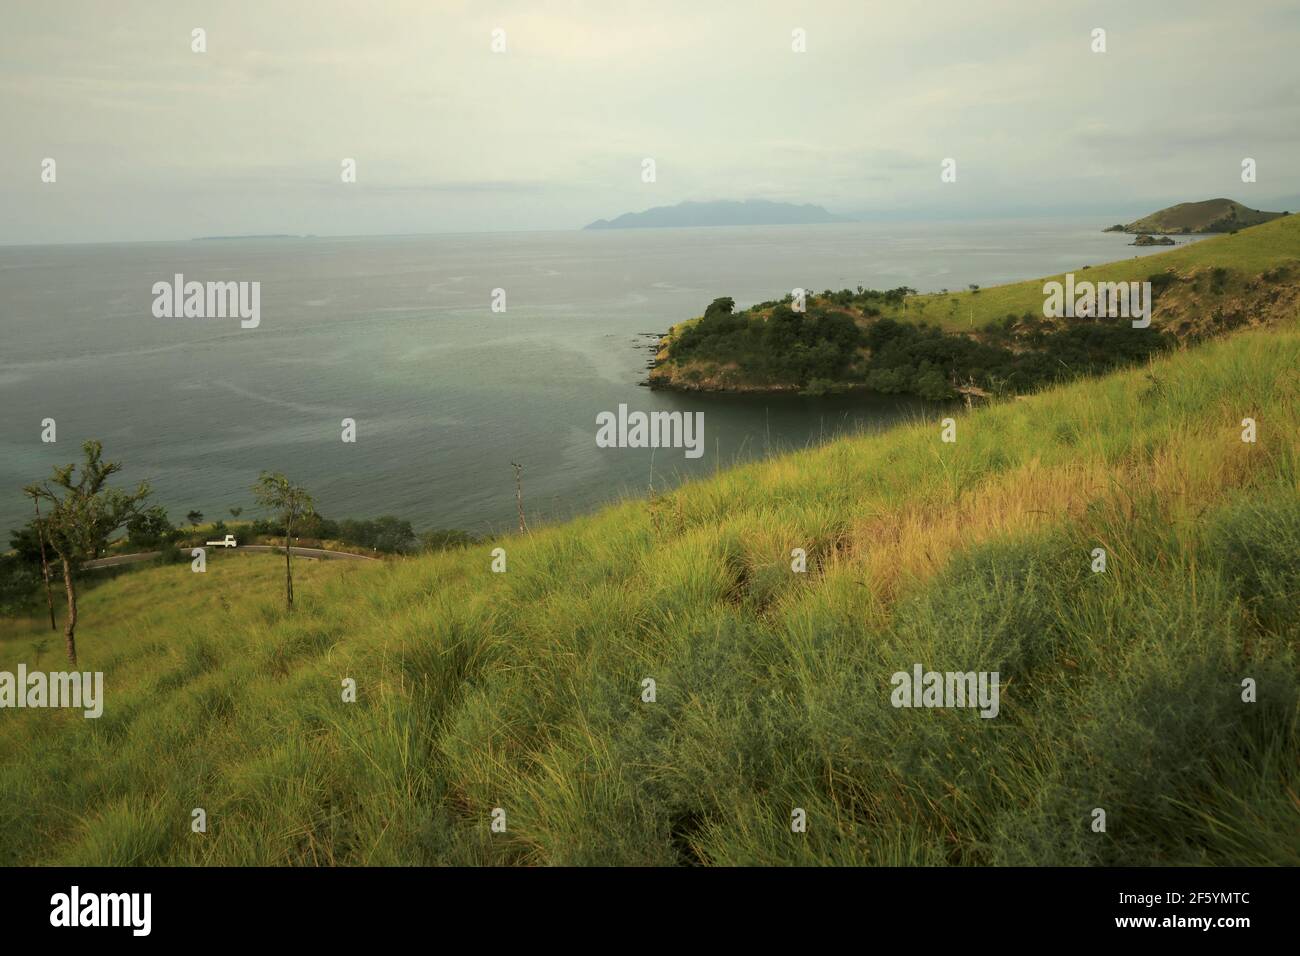 Grassland on coastal hills in Kajuwulu near Maumere, Flores Island, East Nusa Tenggara, Indonesia. Stock Photo